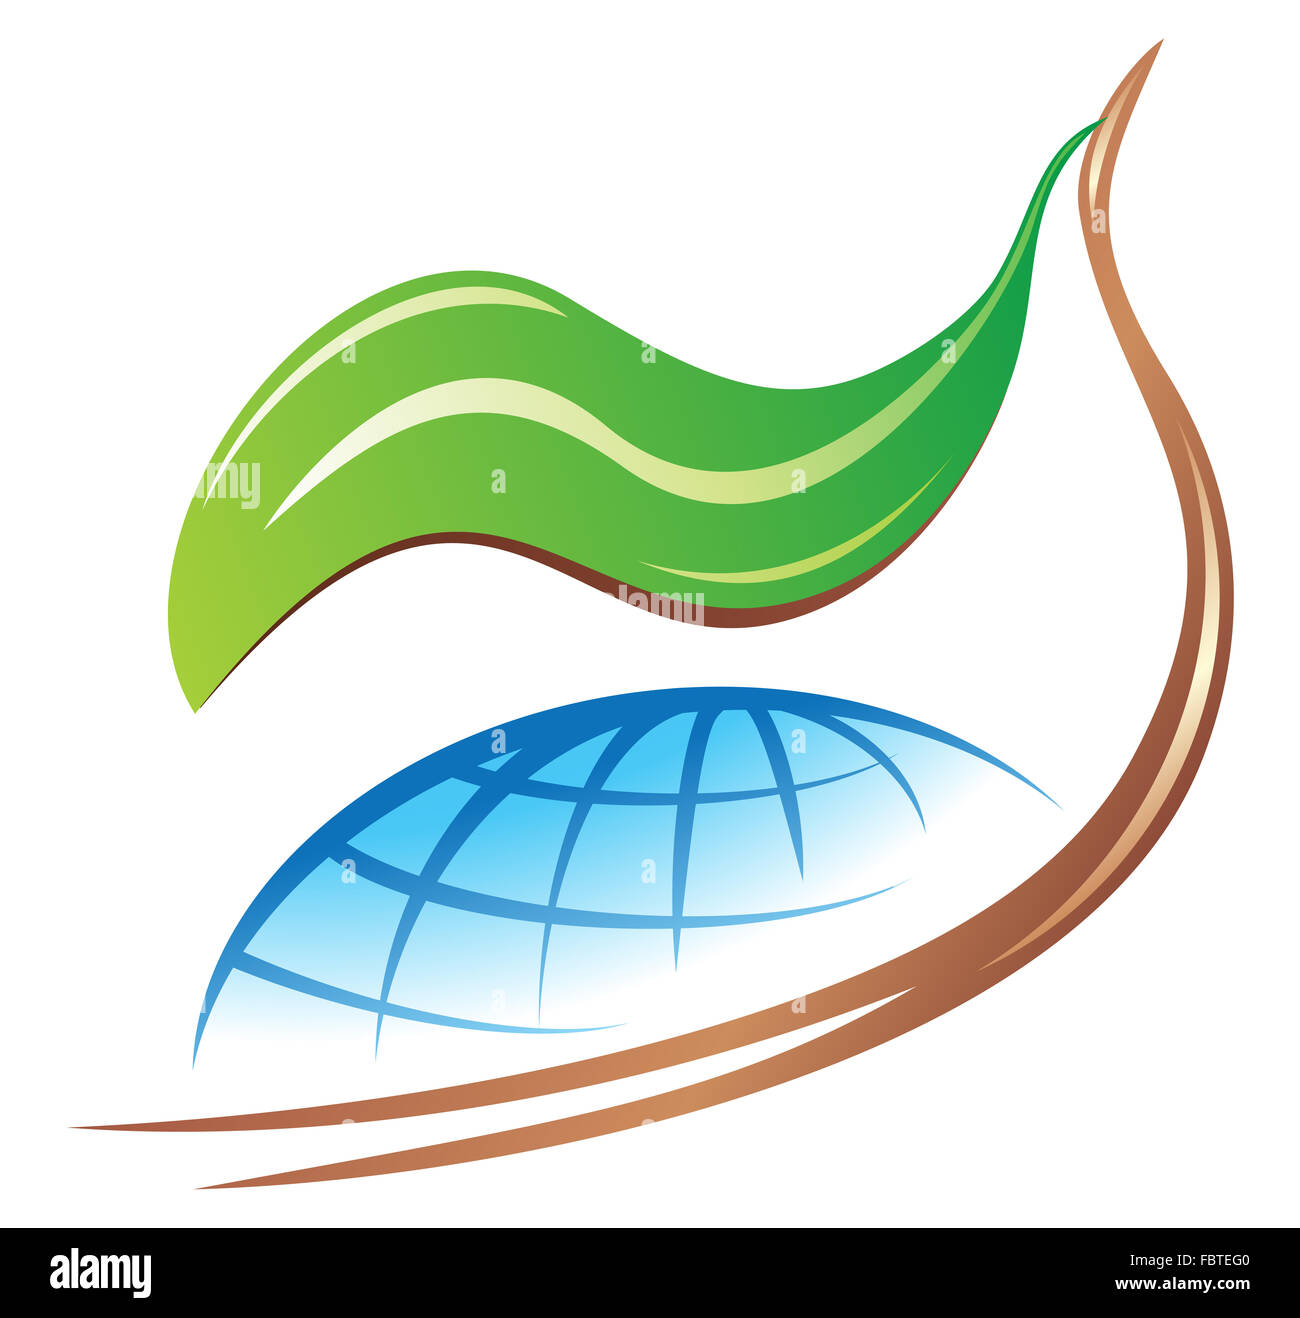 Save earth logo Stock Photo